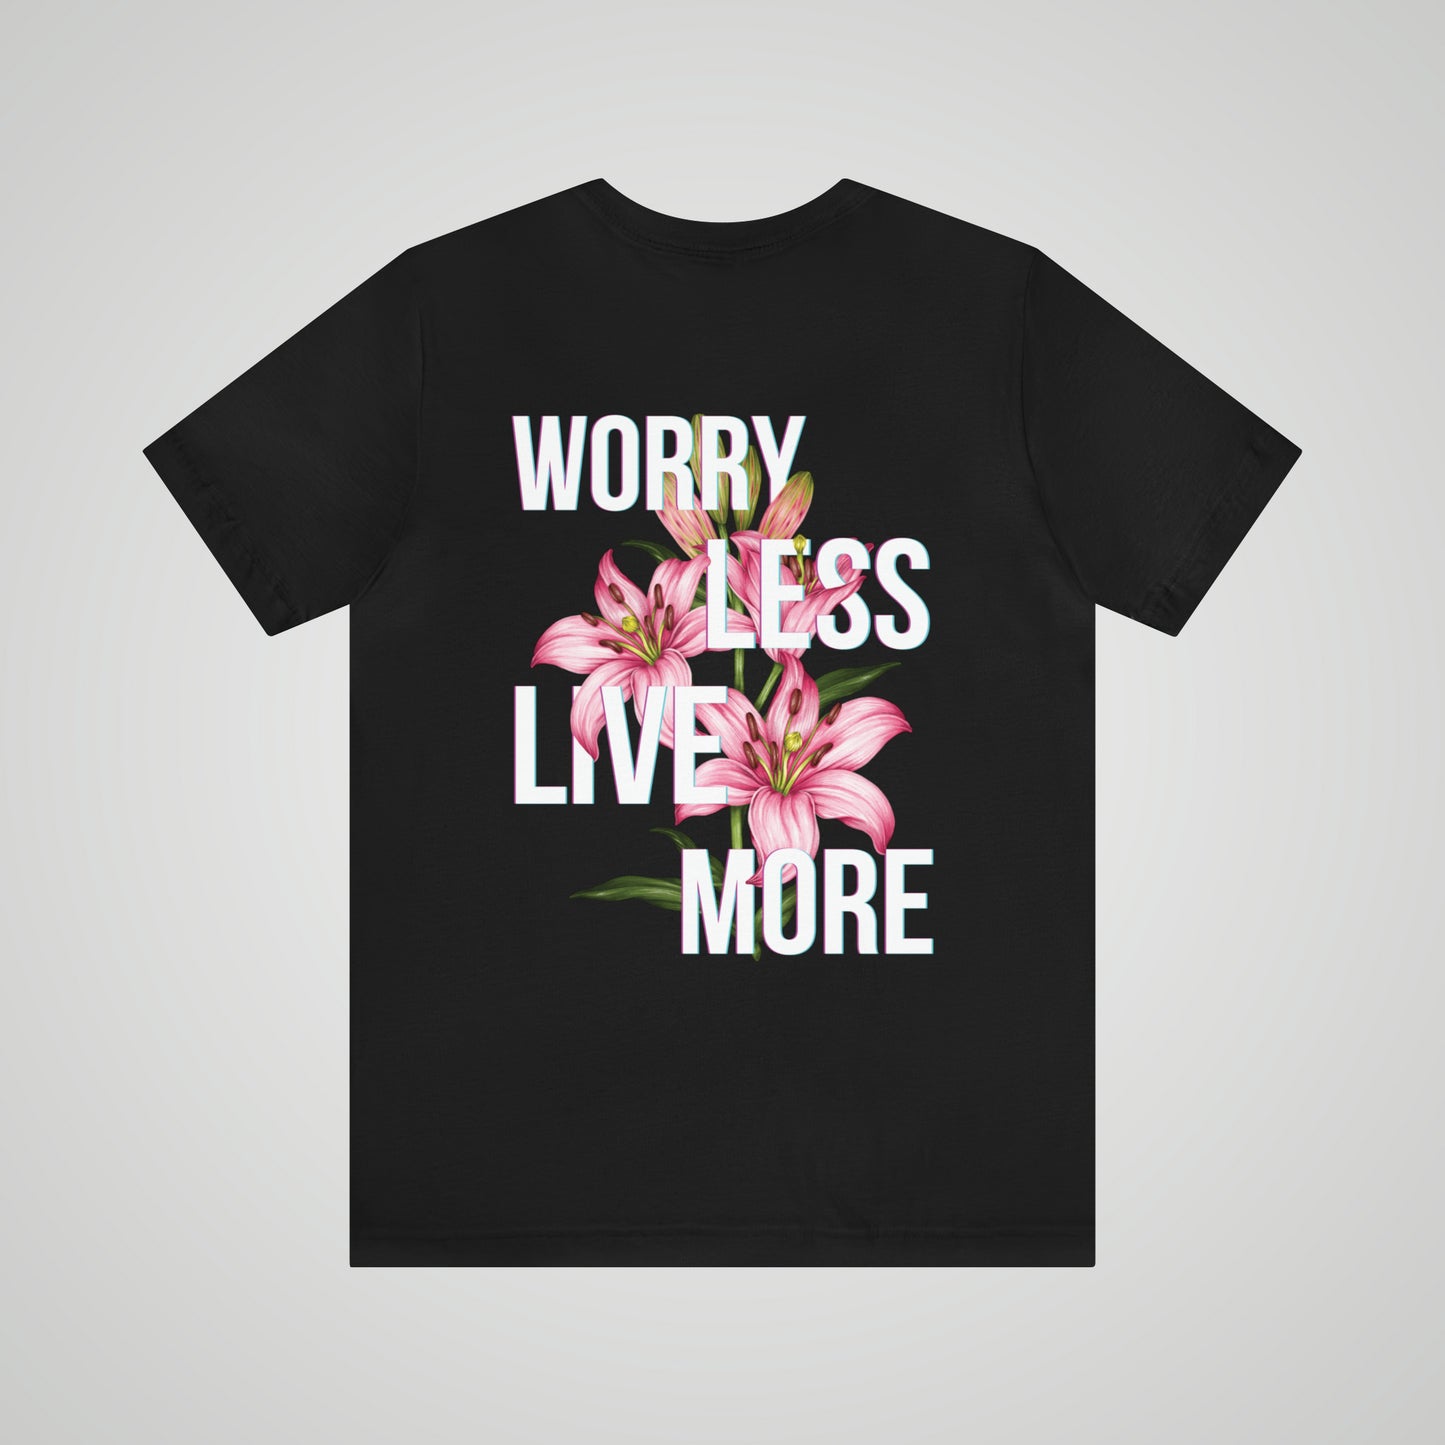 Worry less live more shirt